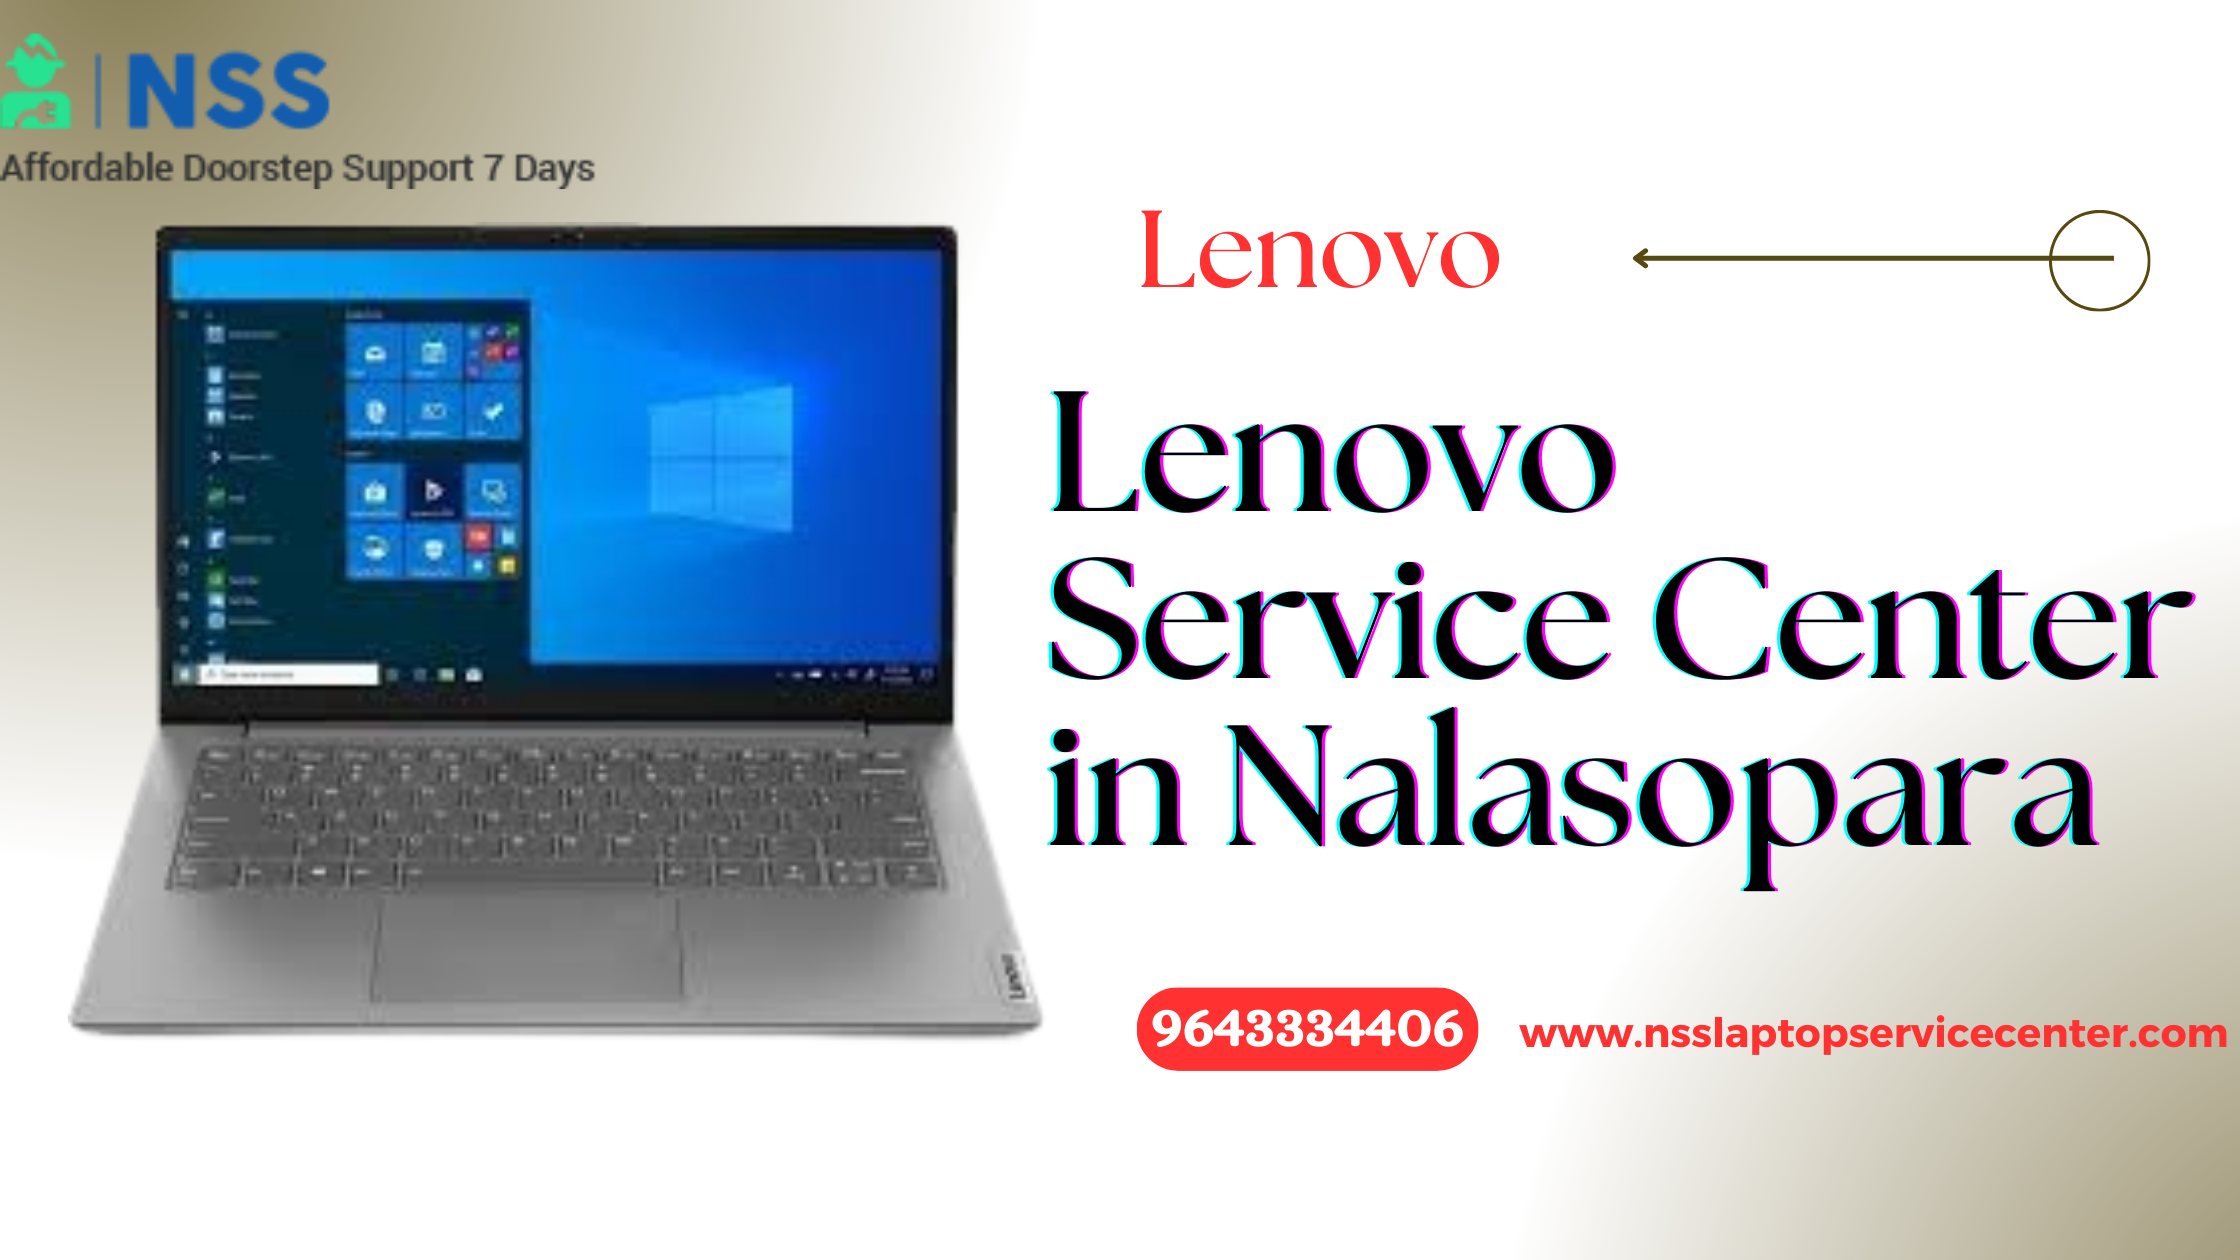 Lenovo Service Center in Nalasopara Near Mumbai